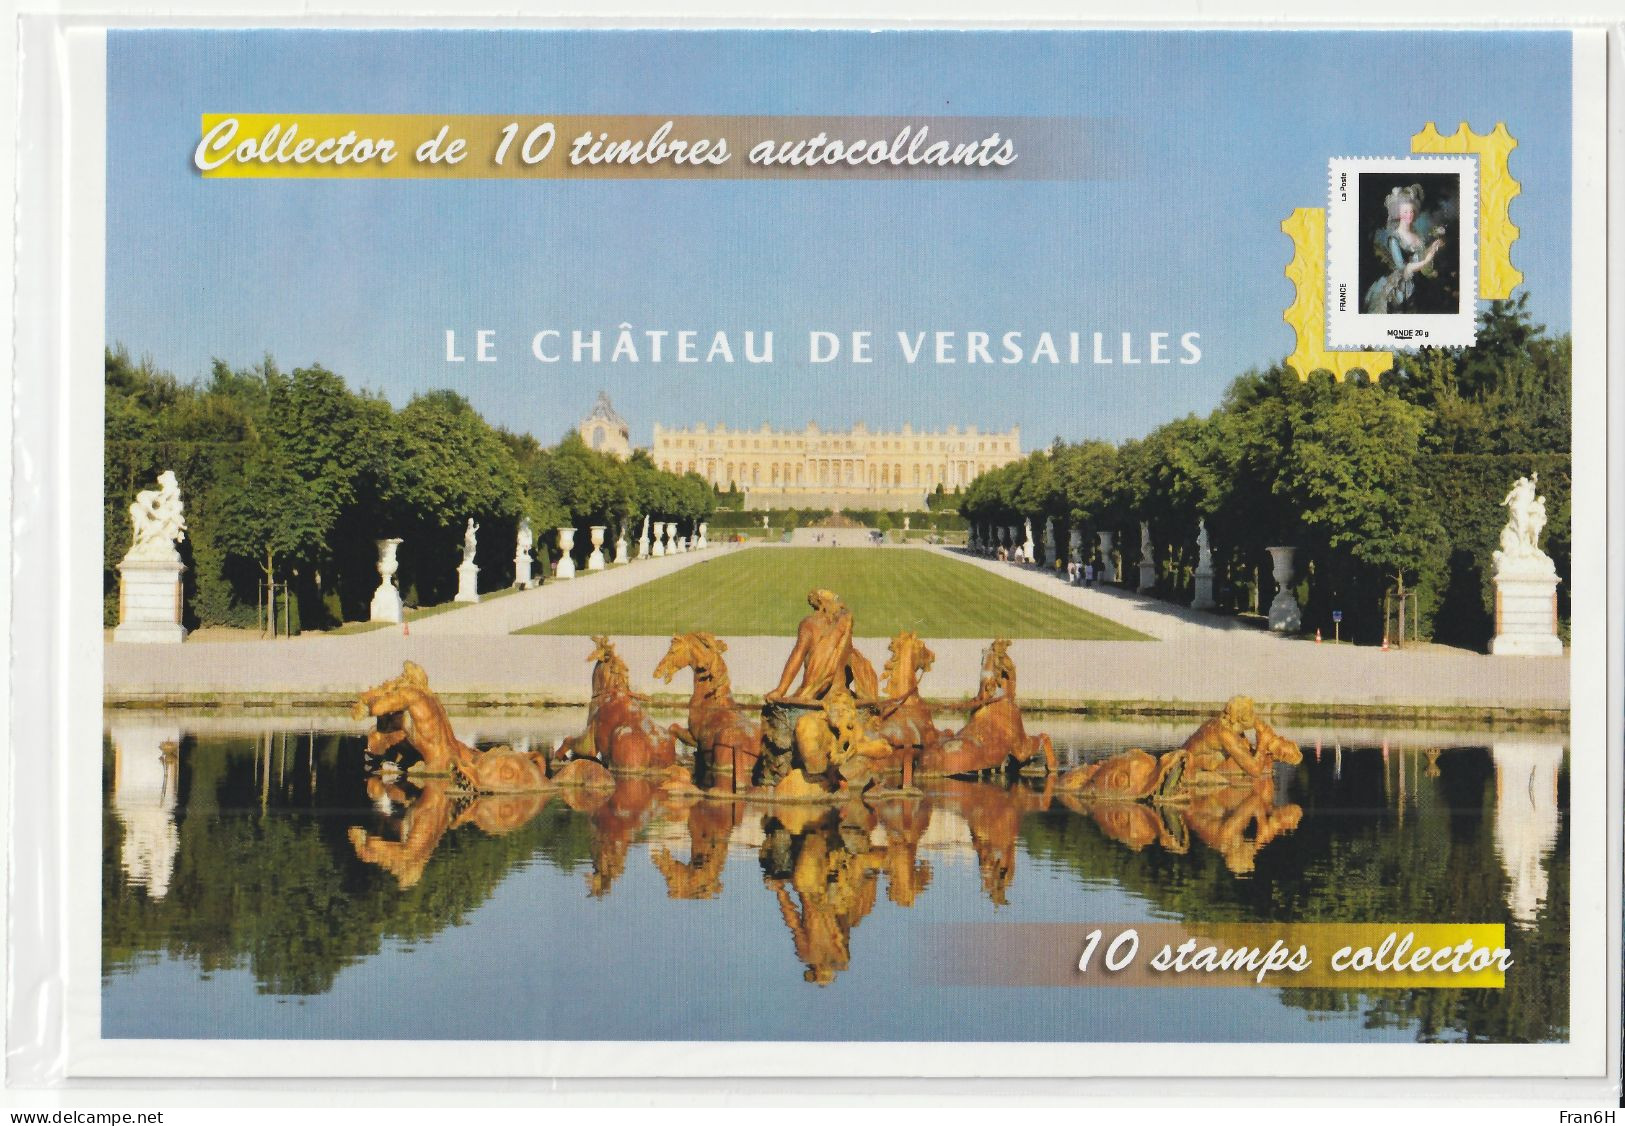 Collector 2012 - Versailles - 10 TVP Monde - Neuf Scellé - Autoadhesif - Autocollant - Collectors